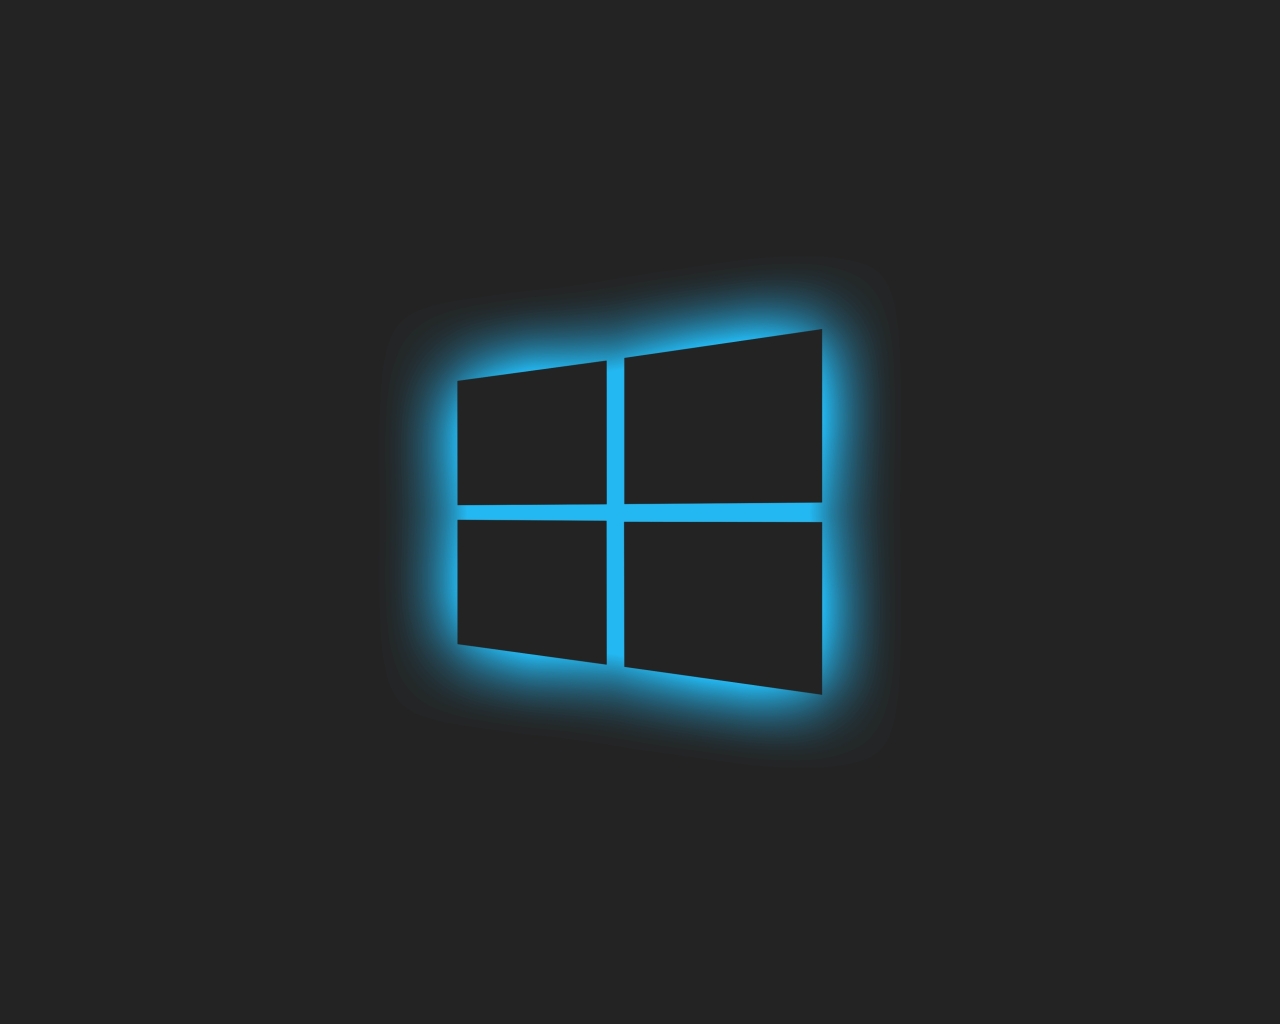 1280x1024 Windows 10 Logo Blue Glow 1280x1024 Resolution Wallpaper, HD  Hi-Tech 4K Wallpapers, Images, Photos and Background - Wallpapers Den